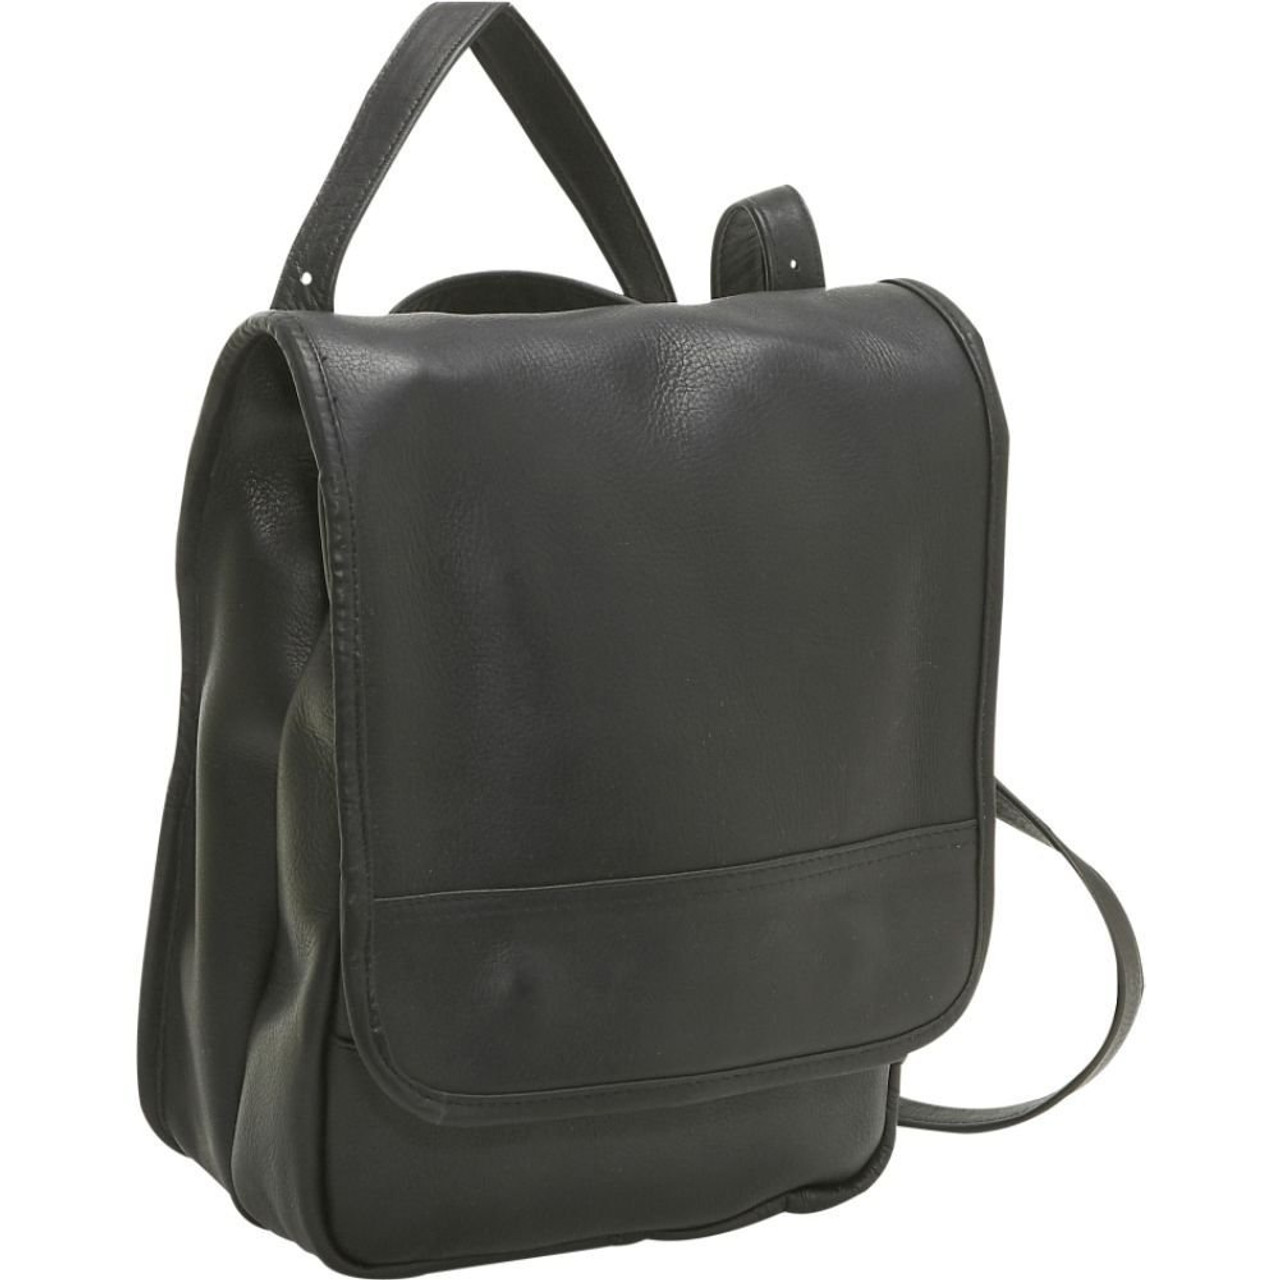 Moda Luxe Breyer Convertible Backpack Purse  Backpack purse, Leather  fringe handbag, Convertible backpack purse